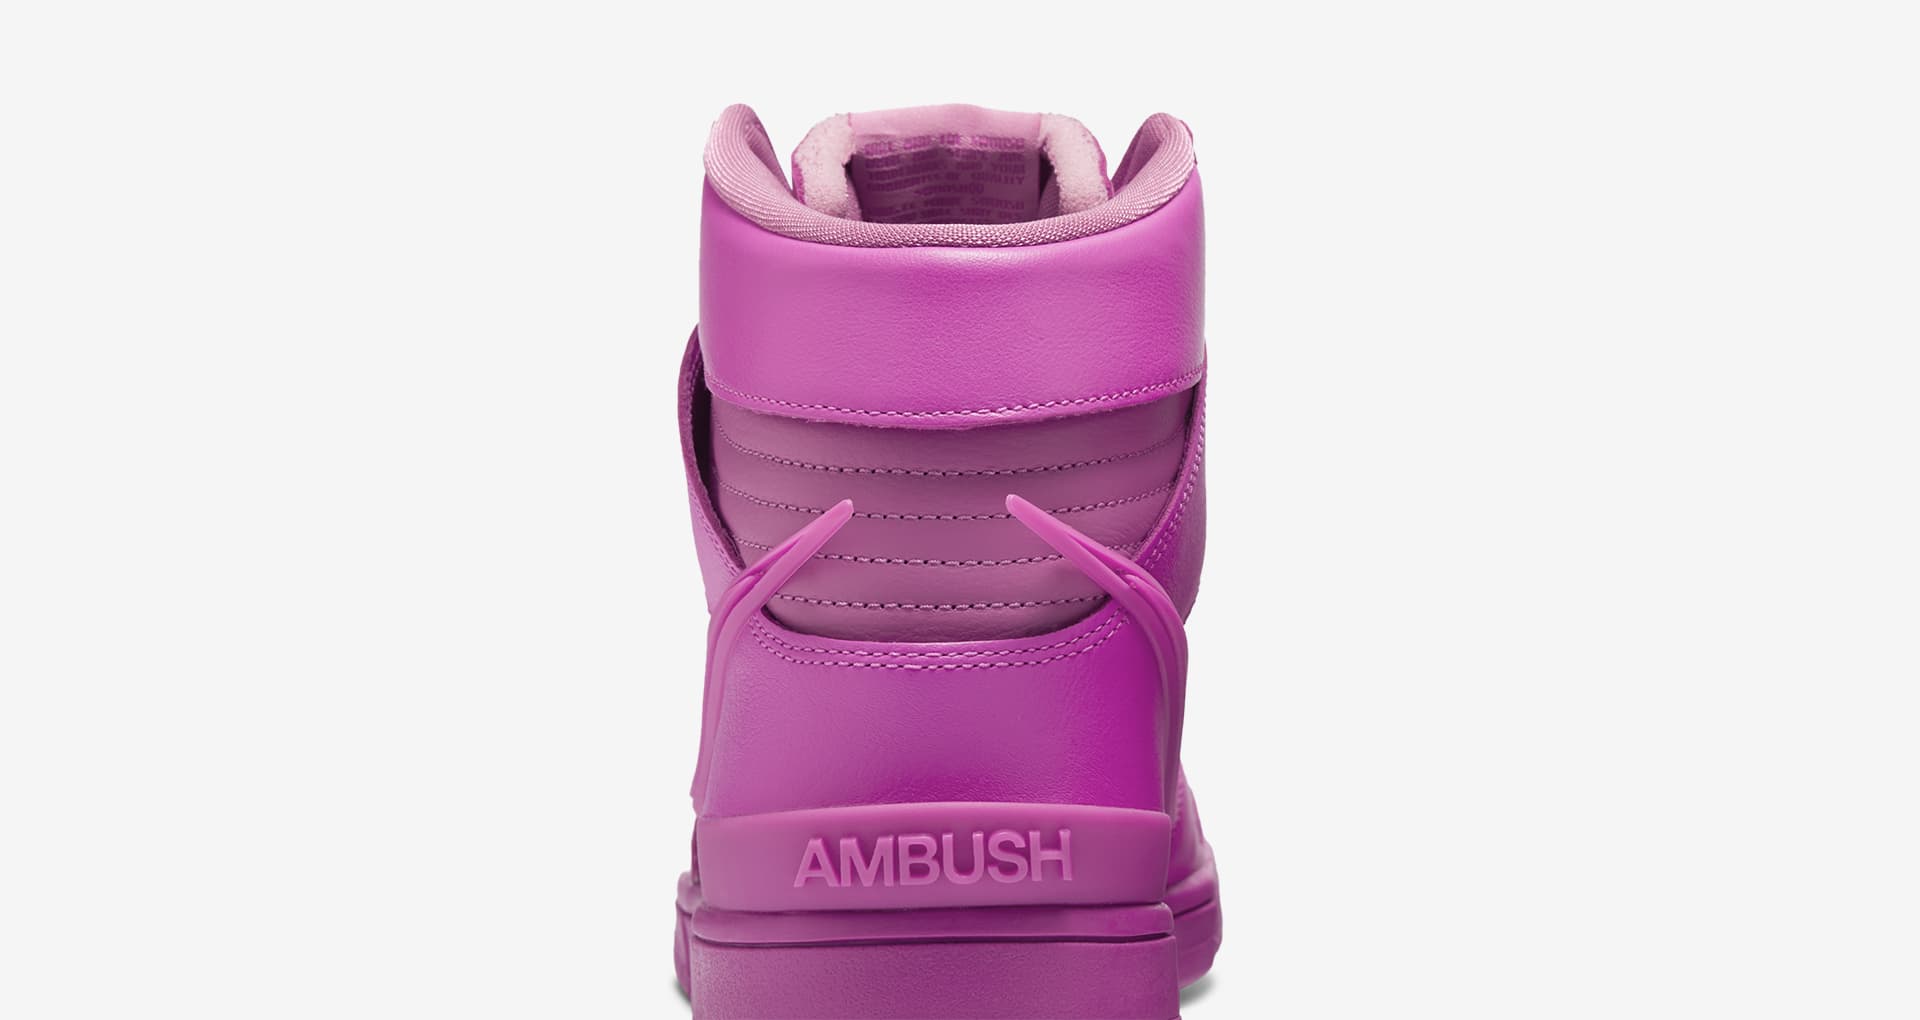 AMBUSH × Nike Dunk Hi “Pink Fuchsia” アンブッシュ × ナイキ ダンク ハイ “ピンク フクシア” ACTIVE FUCHSIA/LETHAL PINK CU7544-600 main nike snkrs